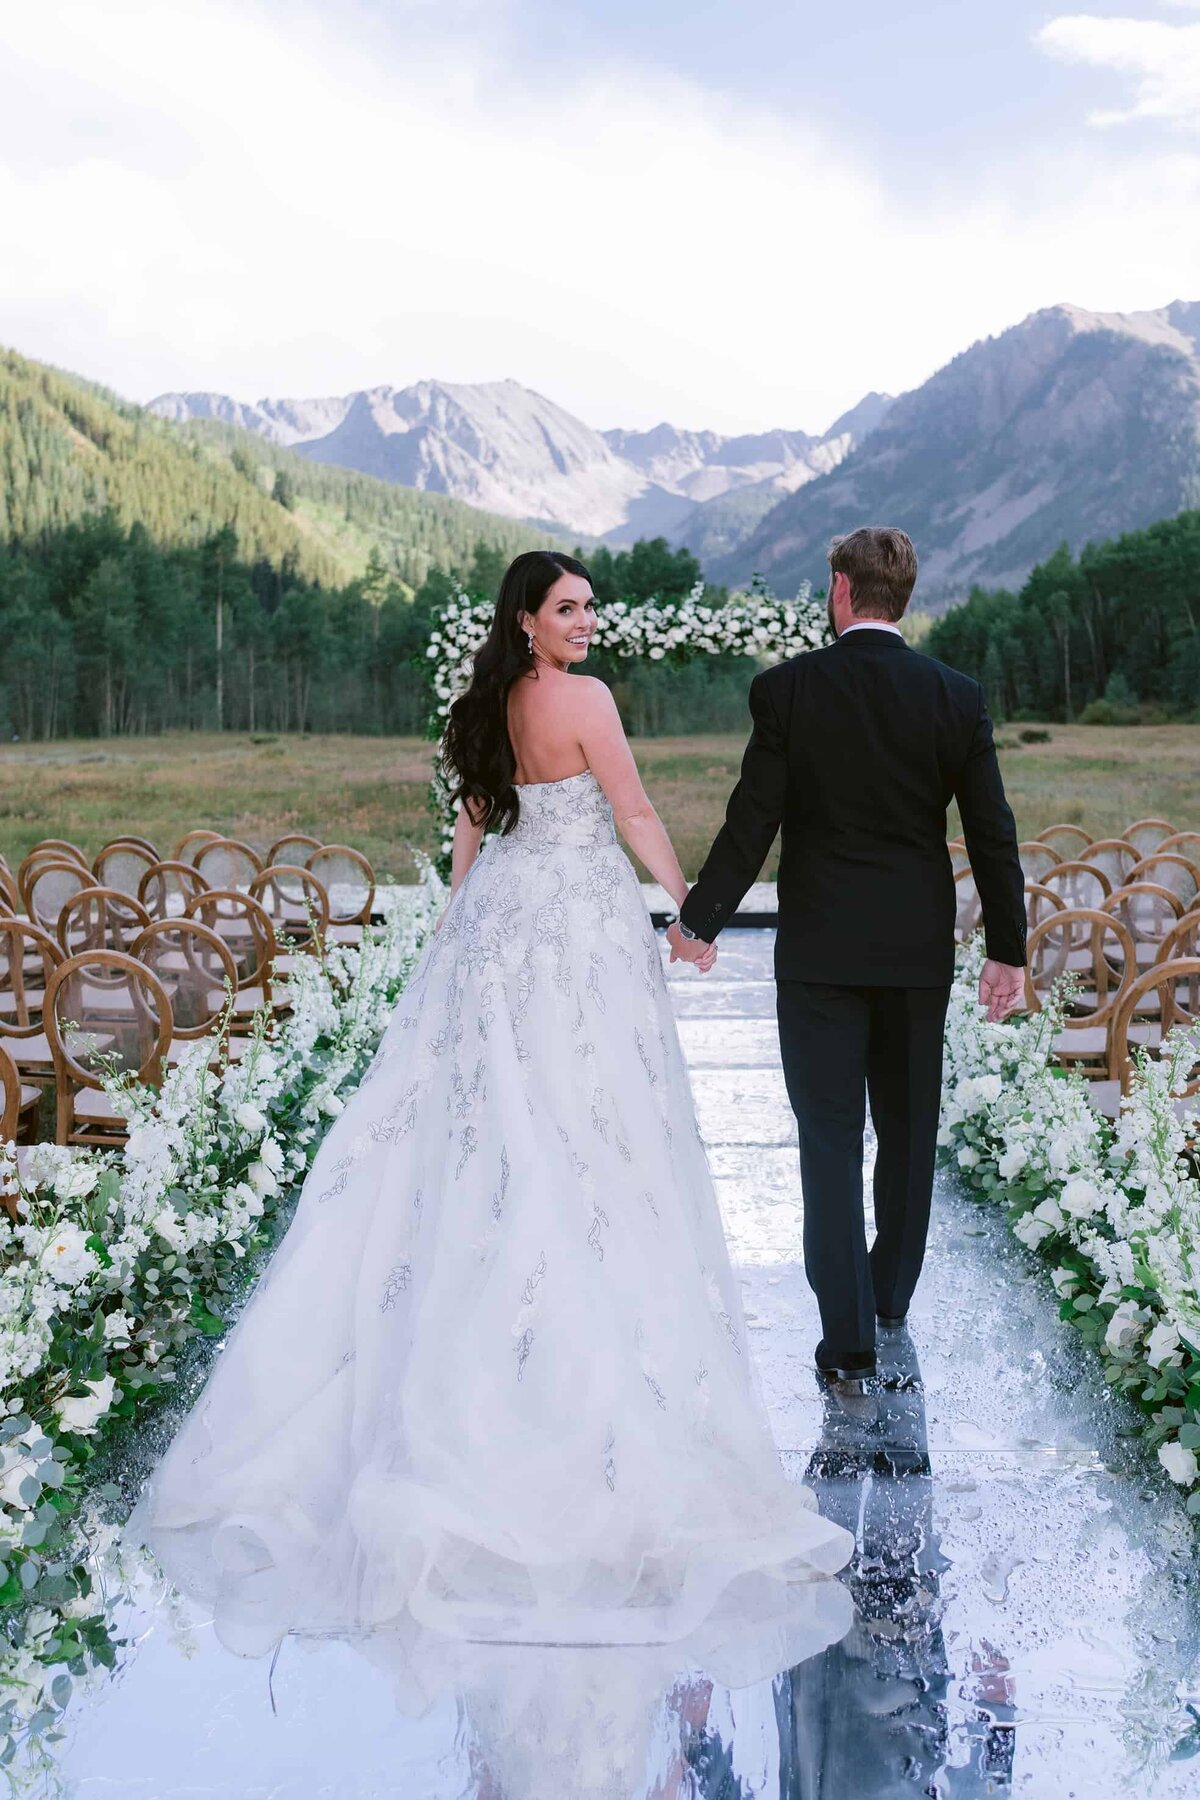 Bride and groom after an outdoor ceremony in Colorado